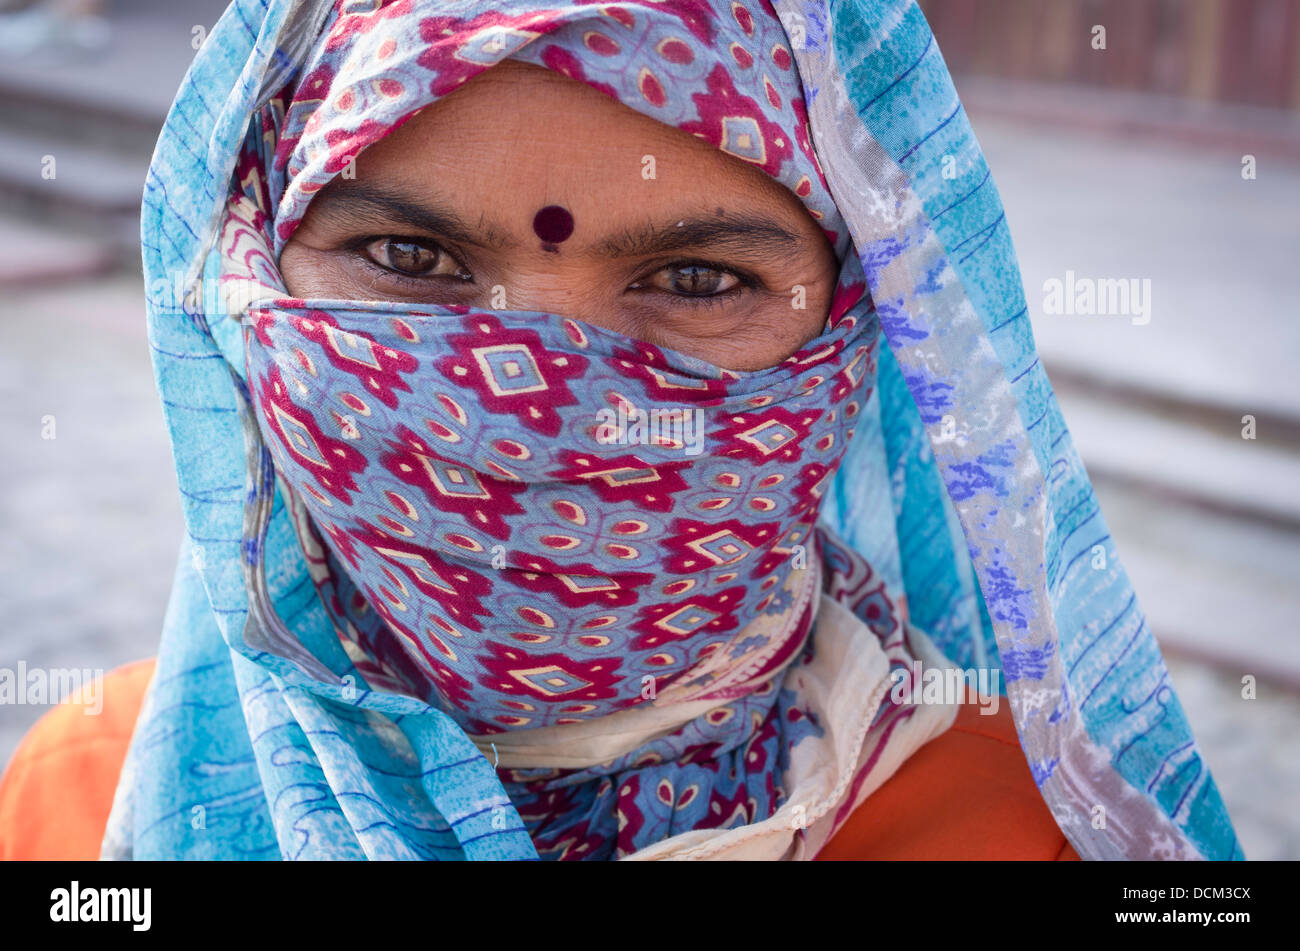 Indian woman with bindi outside Amber ( Amer ) Fort / Palace - Jaipur, Rajasthan, India Stock Photo